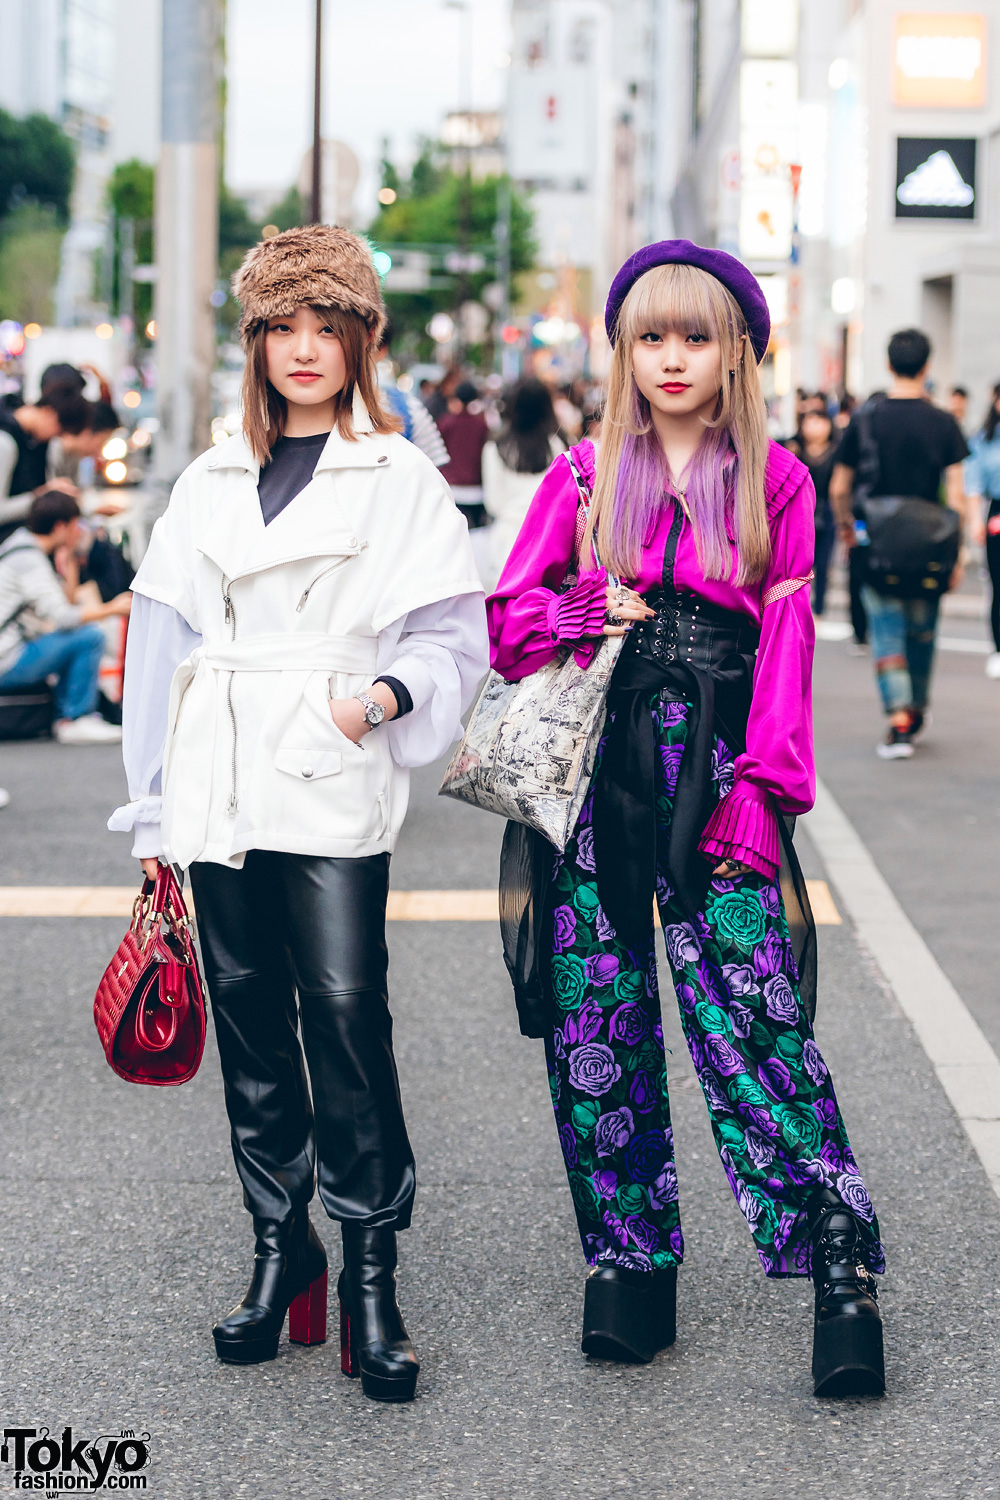 Harajuku Girls in Stylish Street Fashion w/ Paradox, Kinji, Forever21, Vivienne Westood, Alice And The Pirates, Yosuke, Scot.Inc & Faith Tokyo